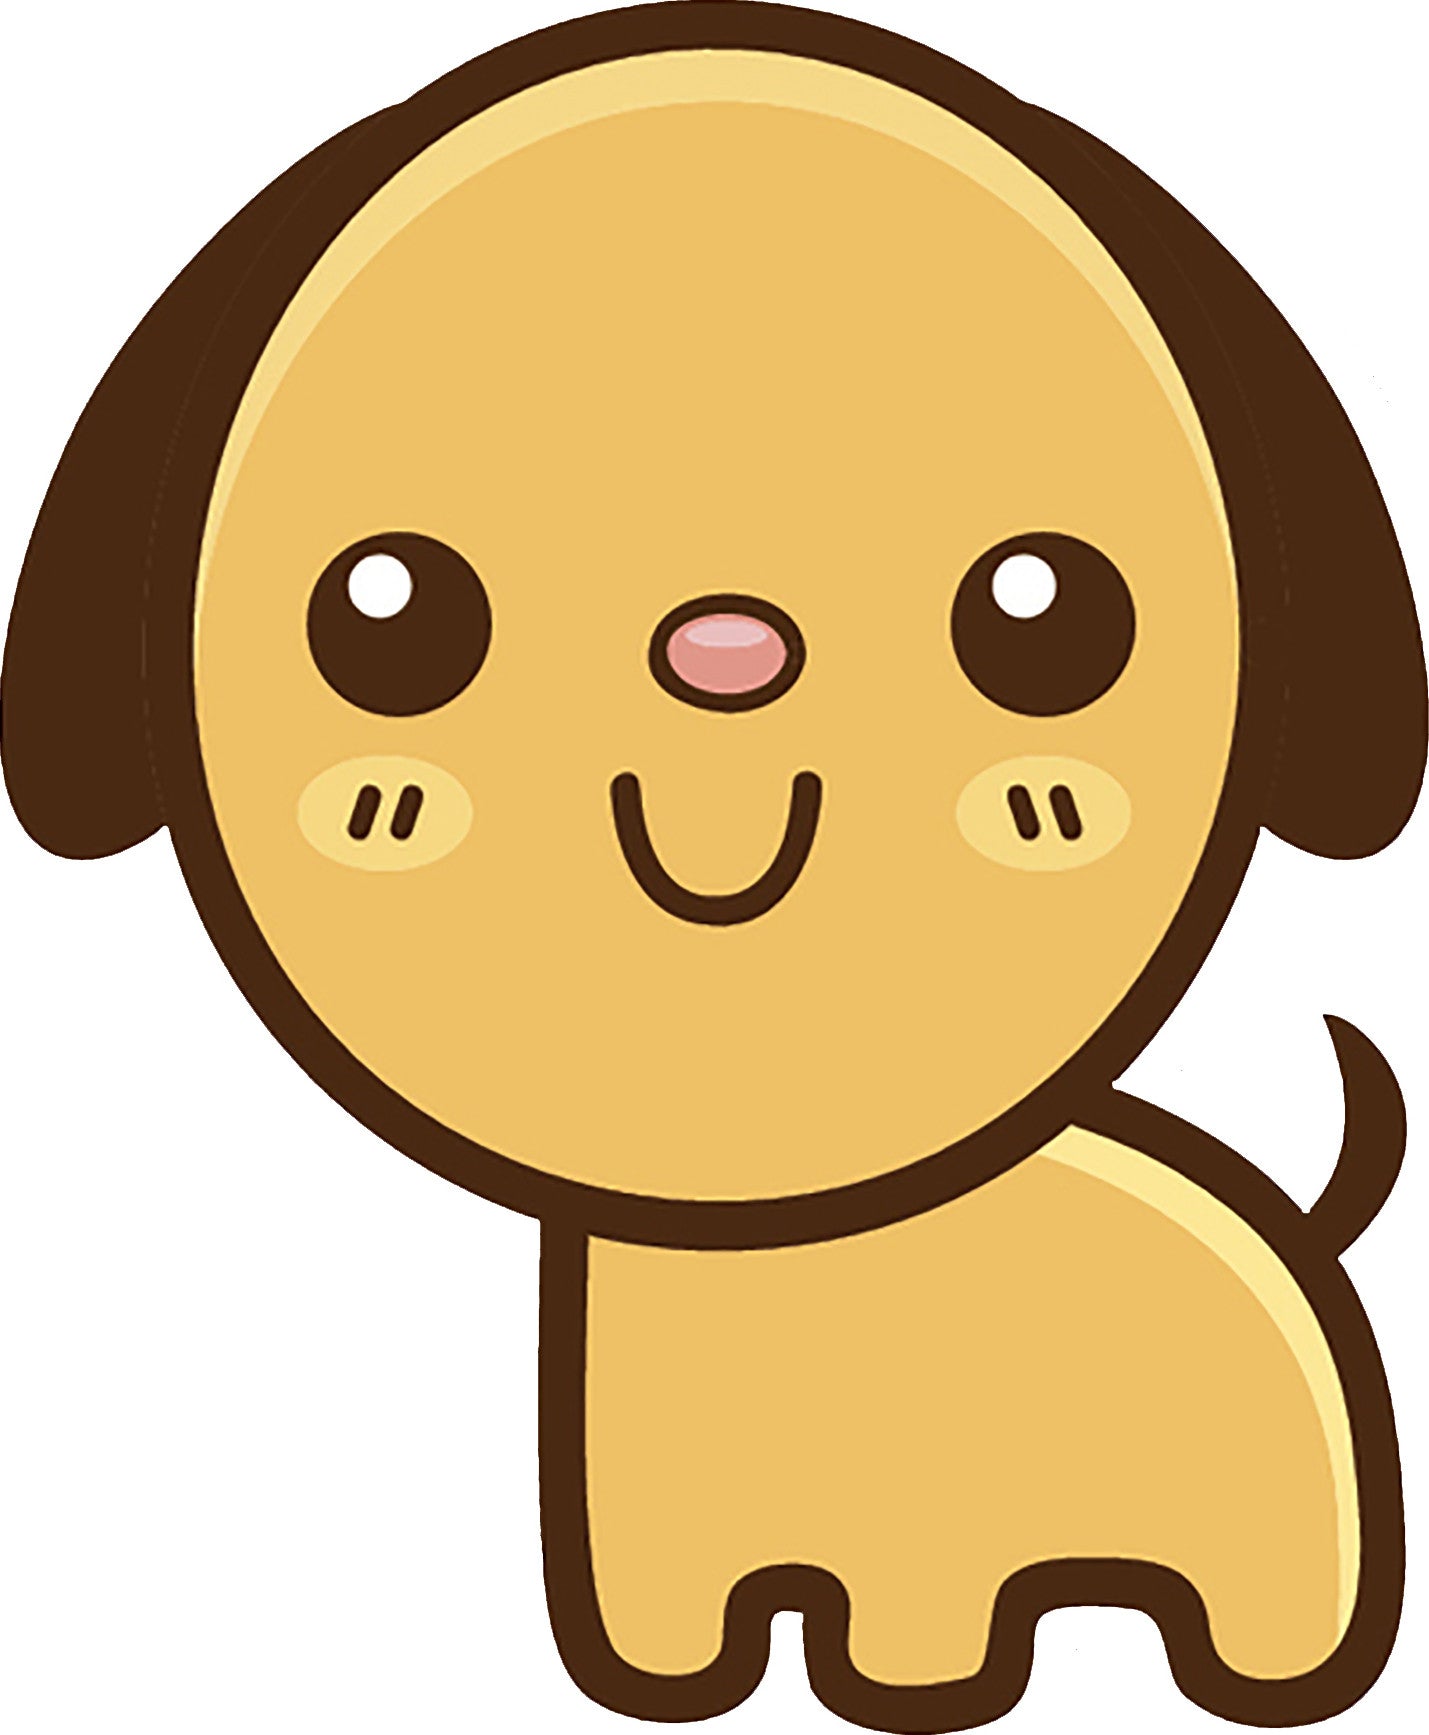 Cute Simple Kawaii Animal Cartoon Icon - Puppy Dog Vinyl Decal Sticker